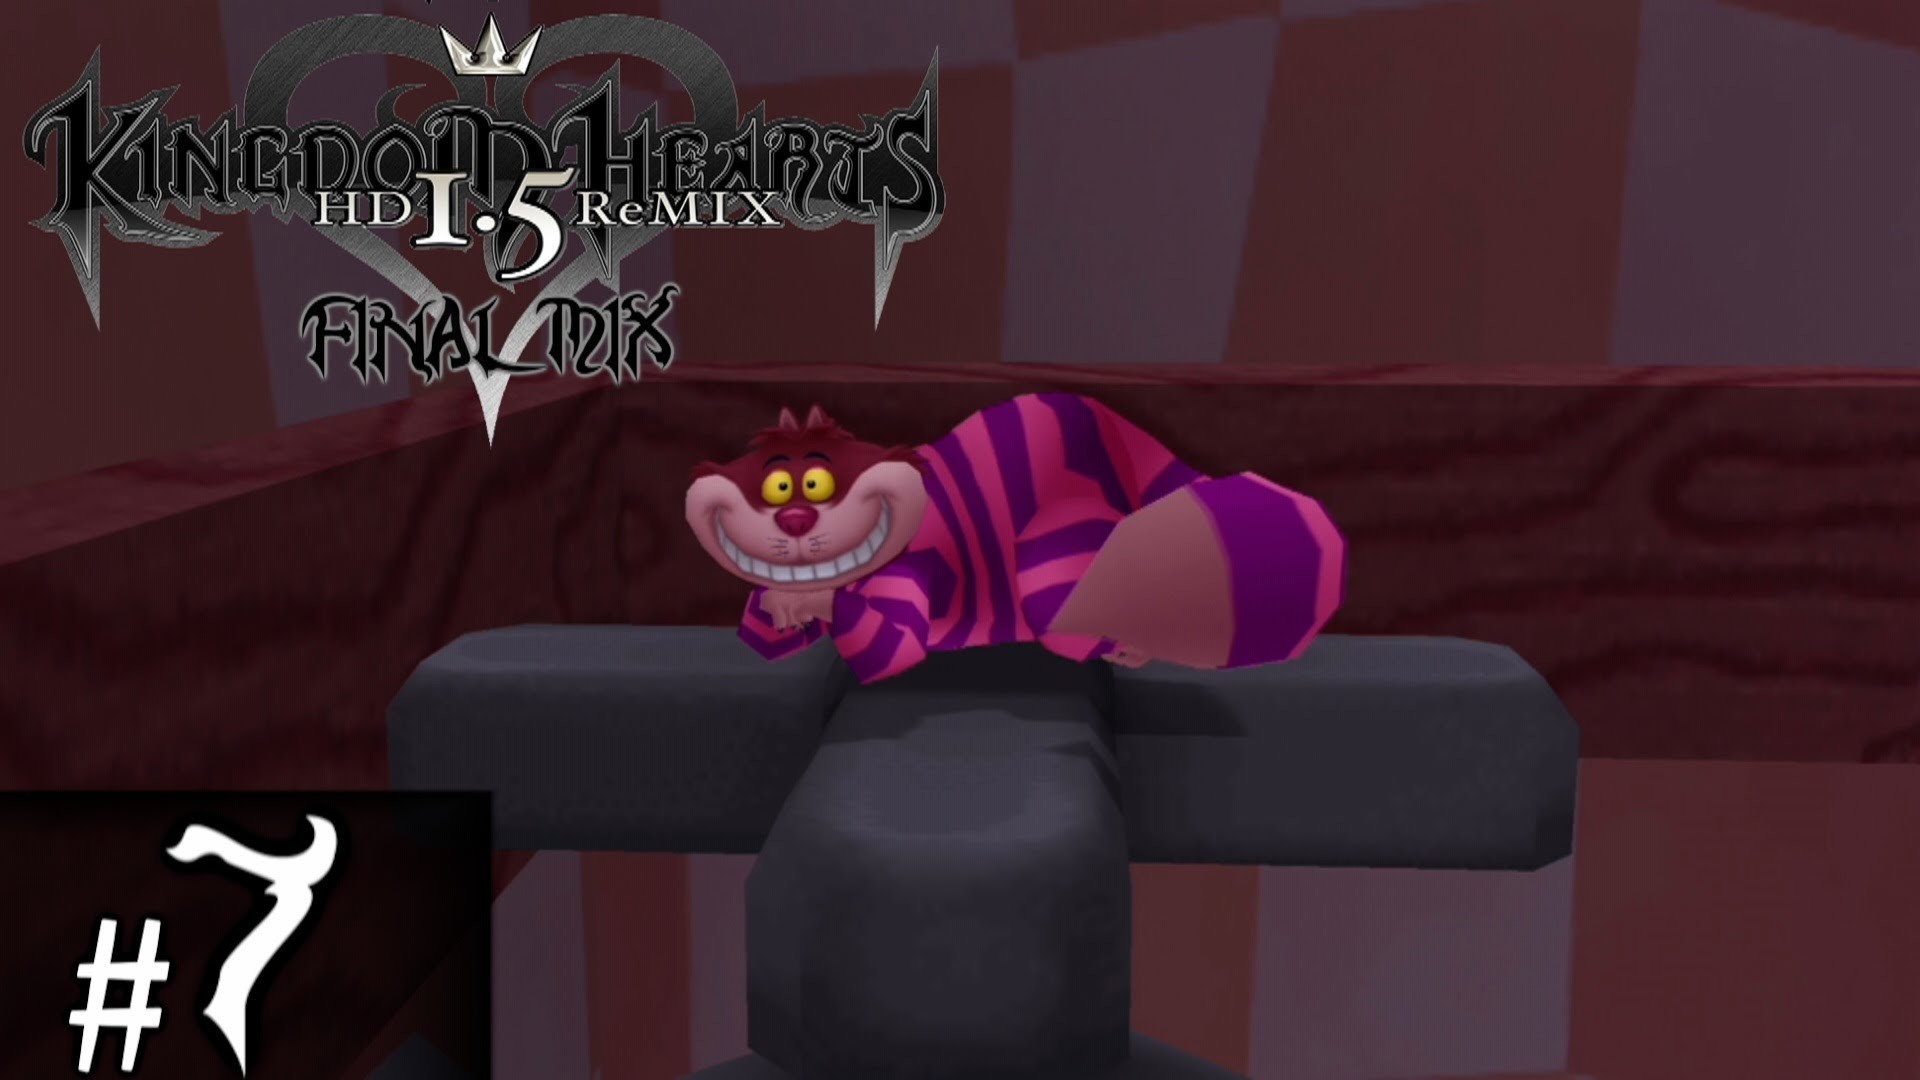 1920x1080 Kingdom Hearts Final Mix HD 1.5 ReMIX Part 7 - Screw You Cheshire Cat!